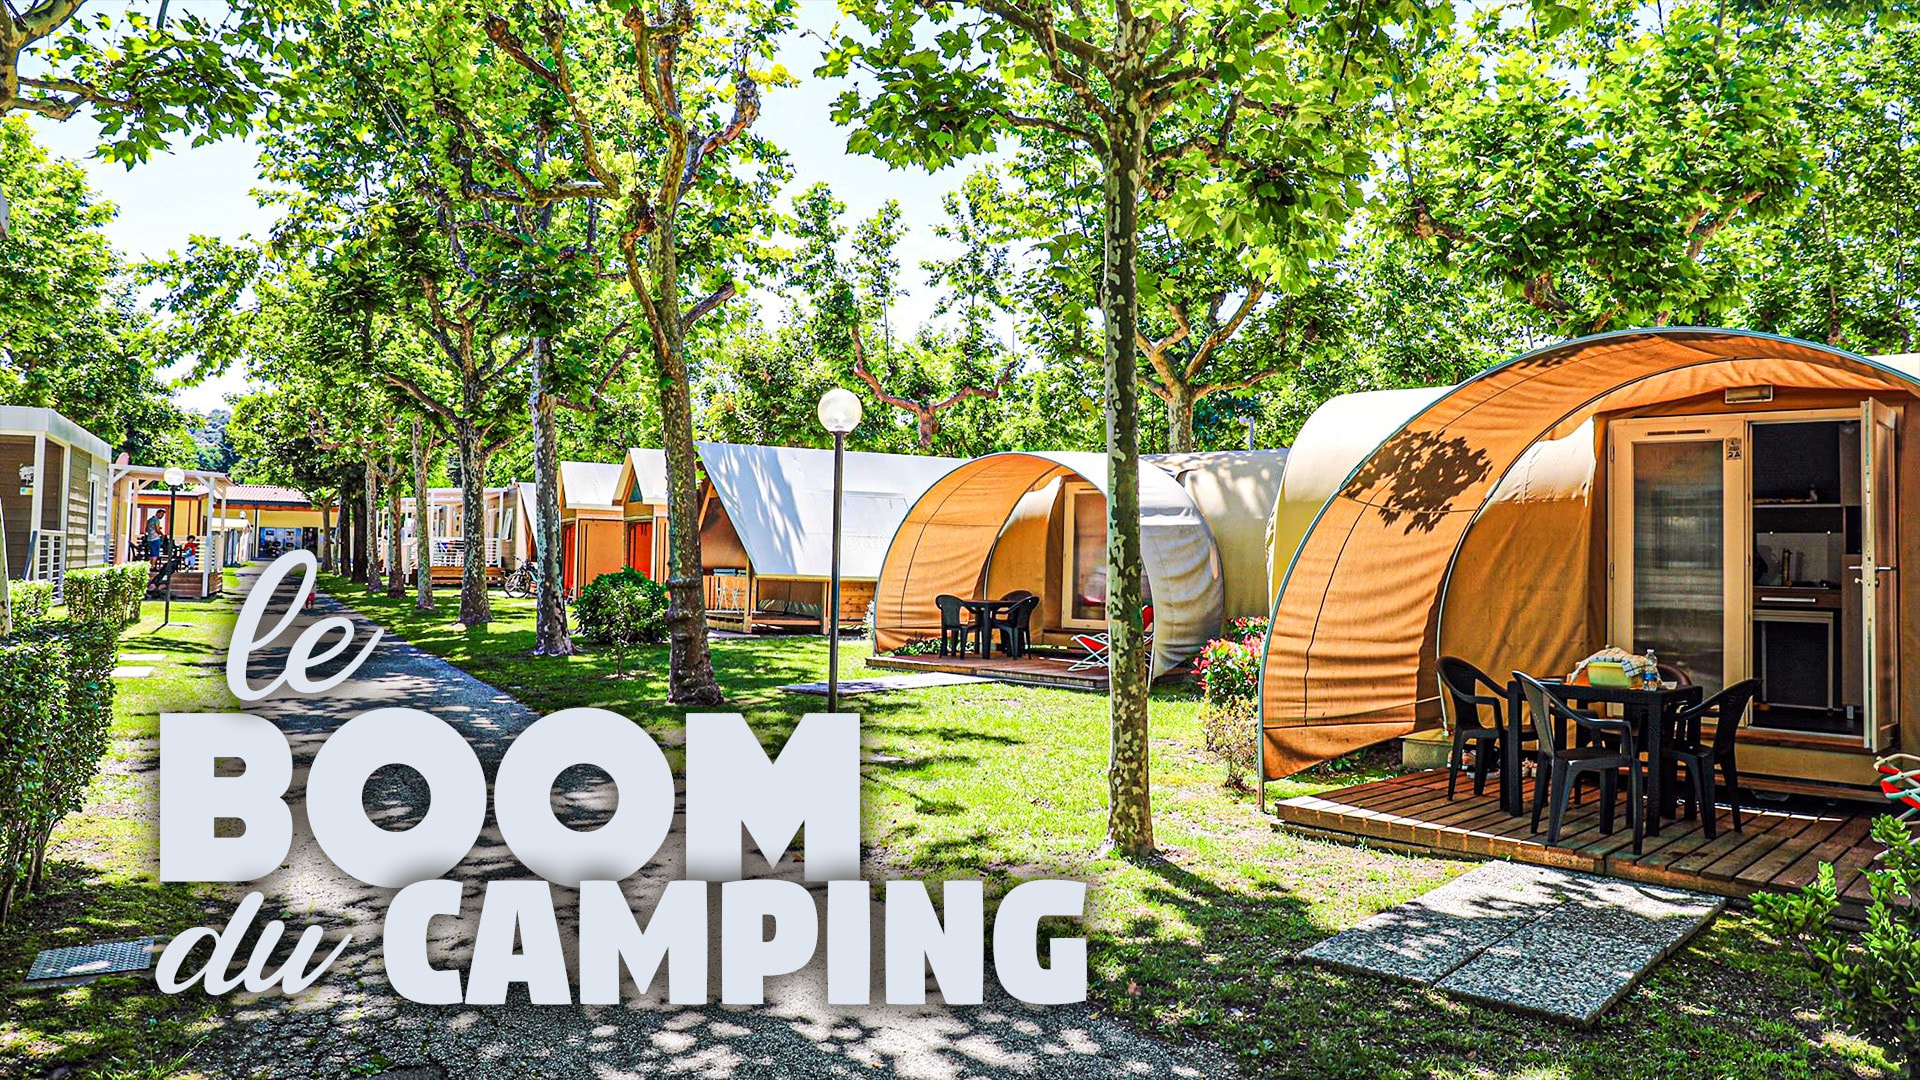 Le boom du camping